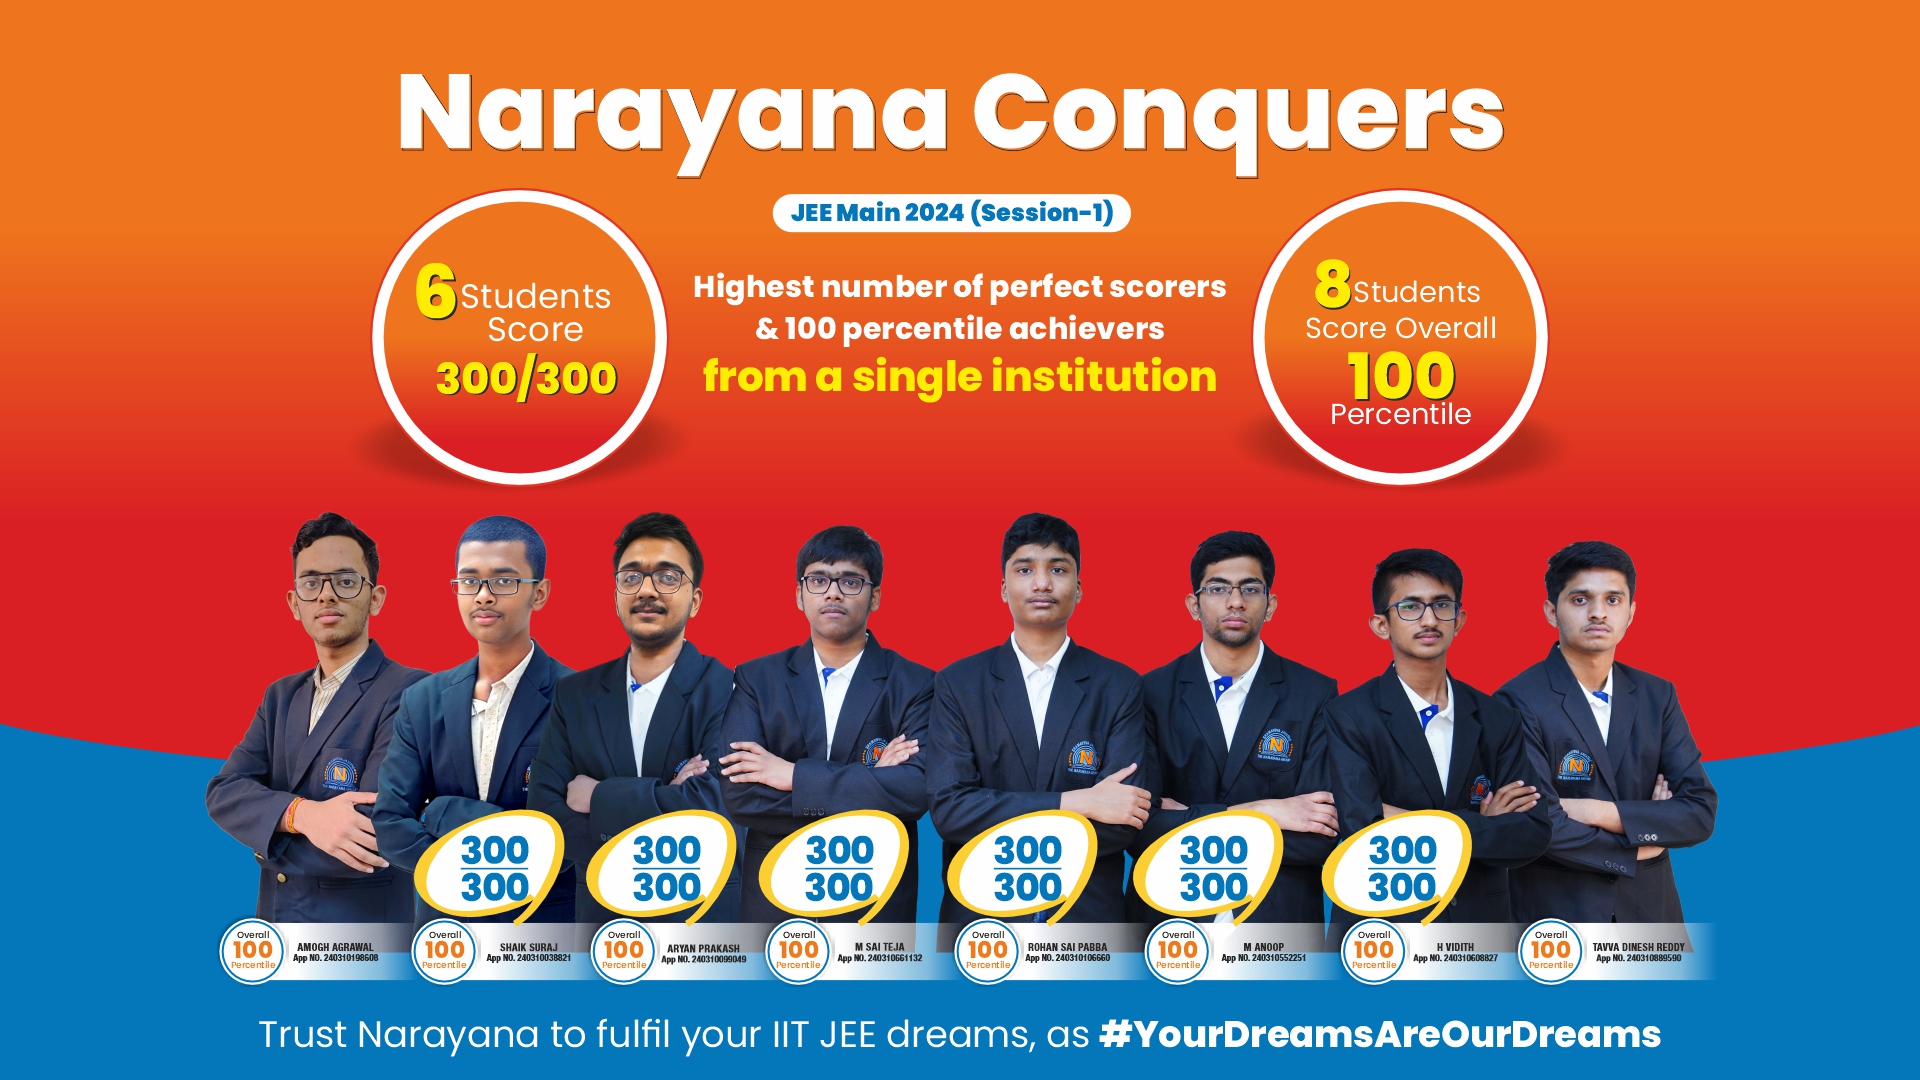 Fulfilling dreams: Narayana sets record in JEE Main 2024 Session 1